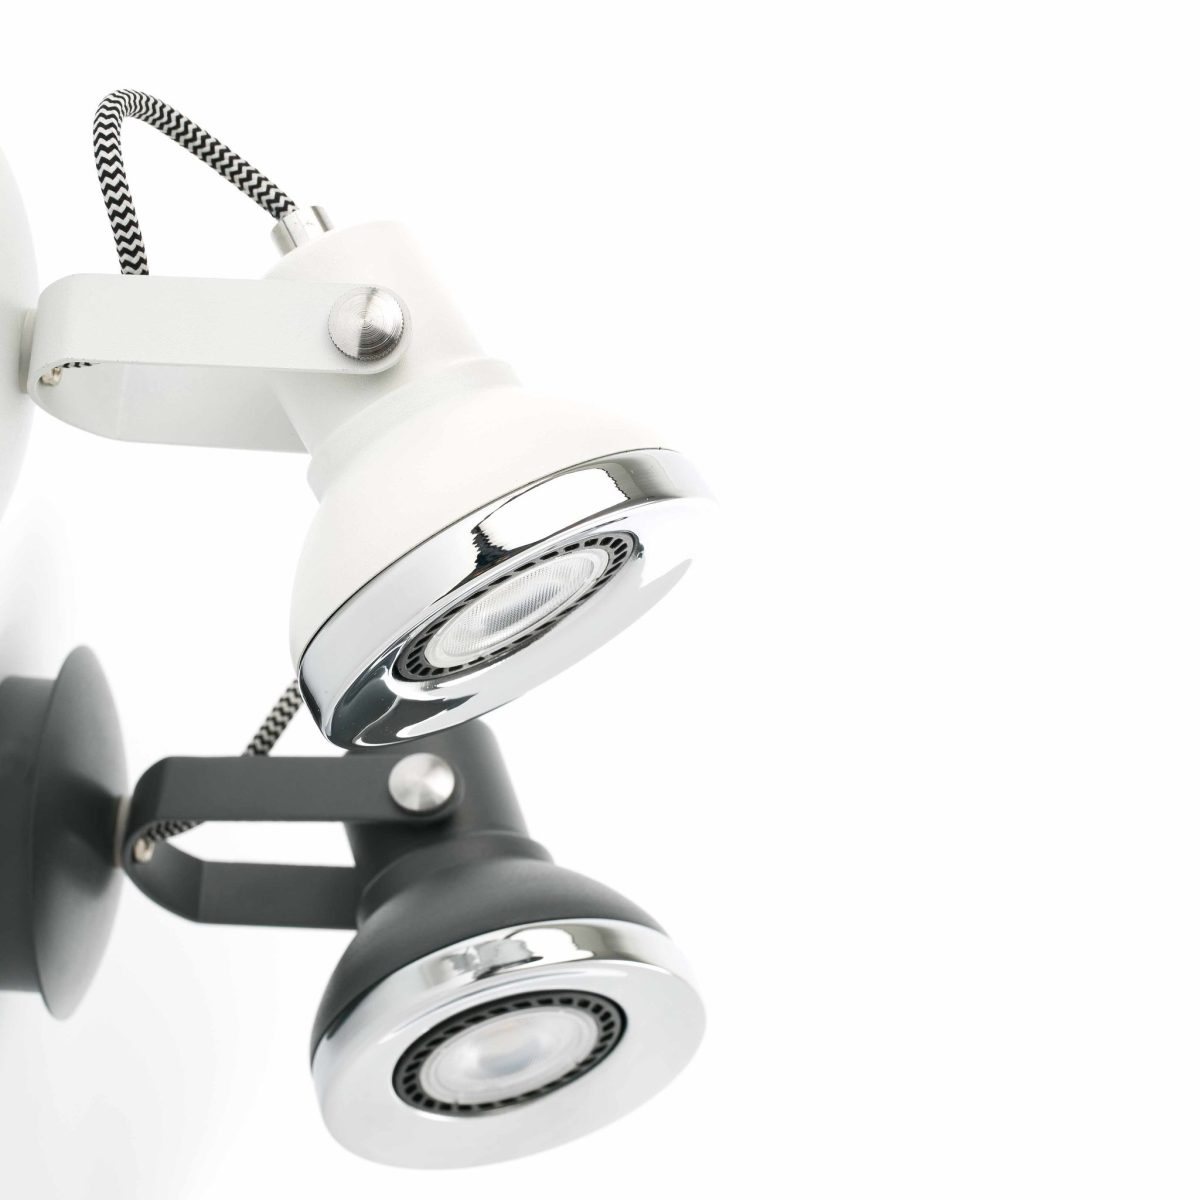 RING LED Aplique de Faro. Medidas: L 85 x A 100 x F 135 mm. Color: Blanco